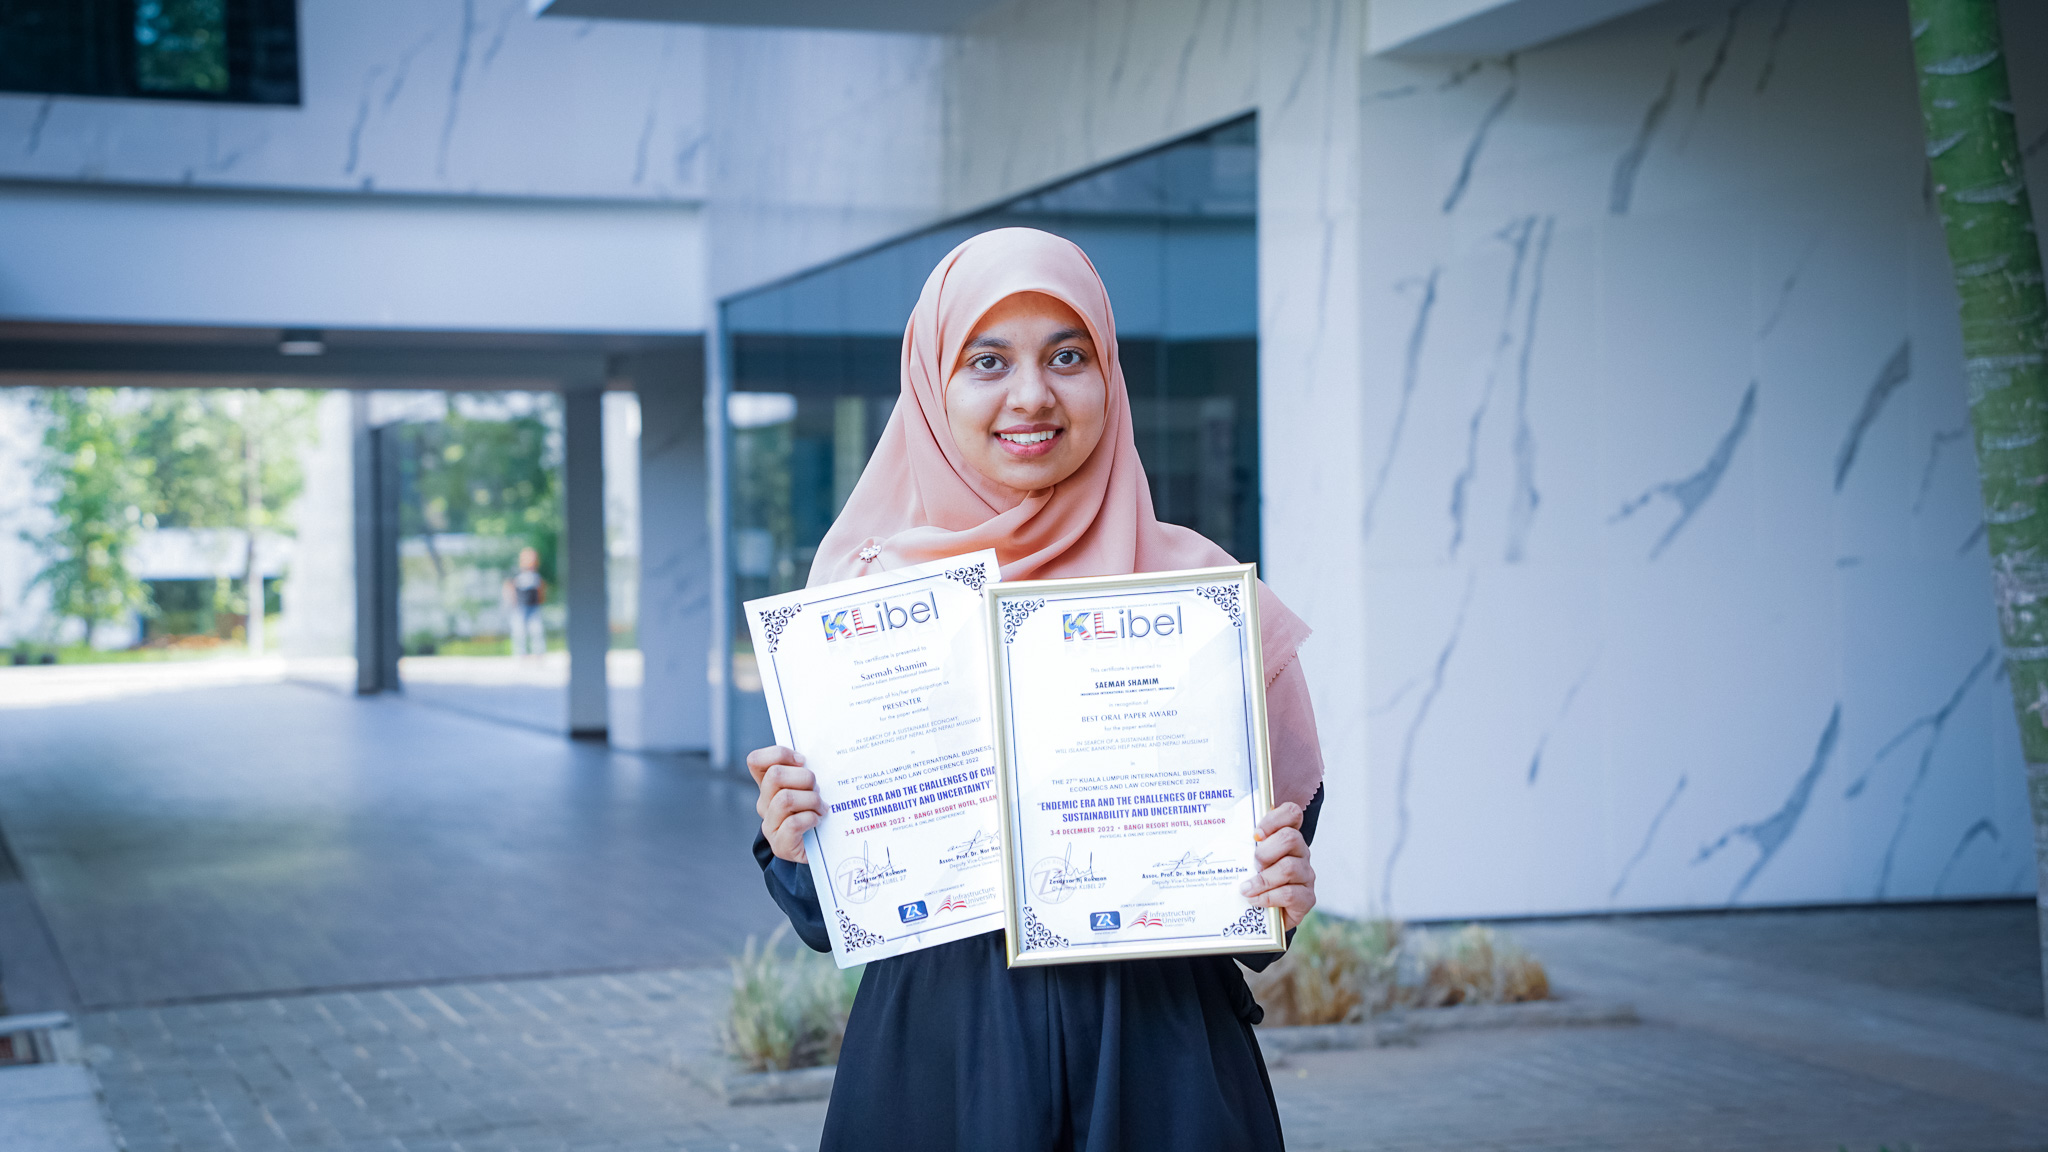 UIII Student Wins ‘Best Paper Award’ at Prestigious International Forum